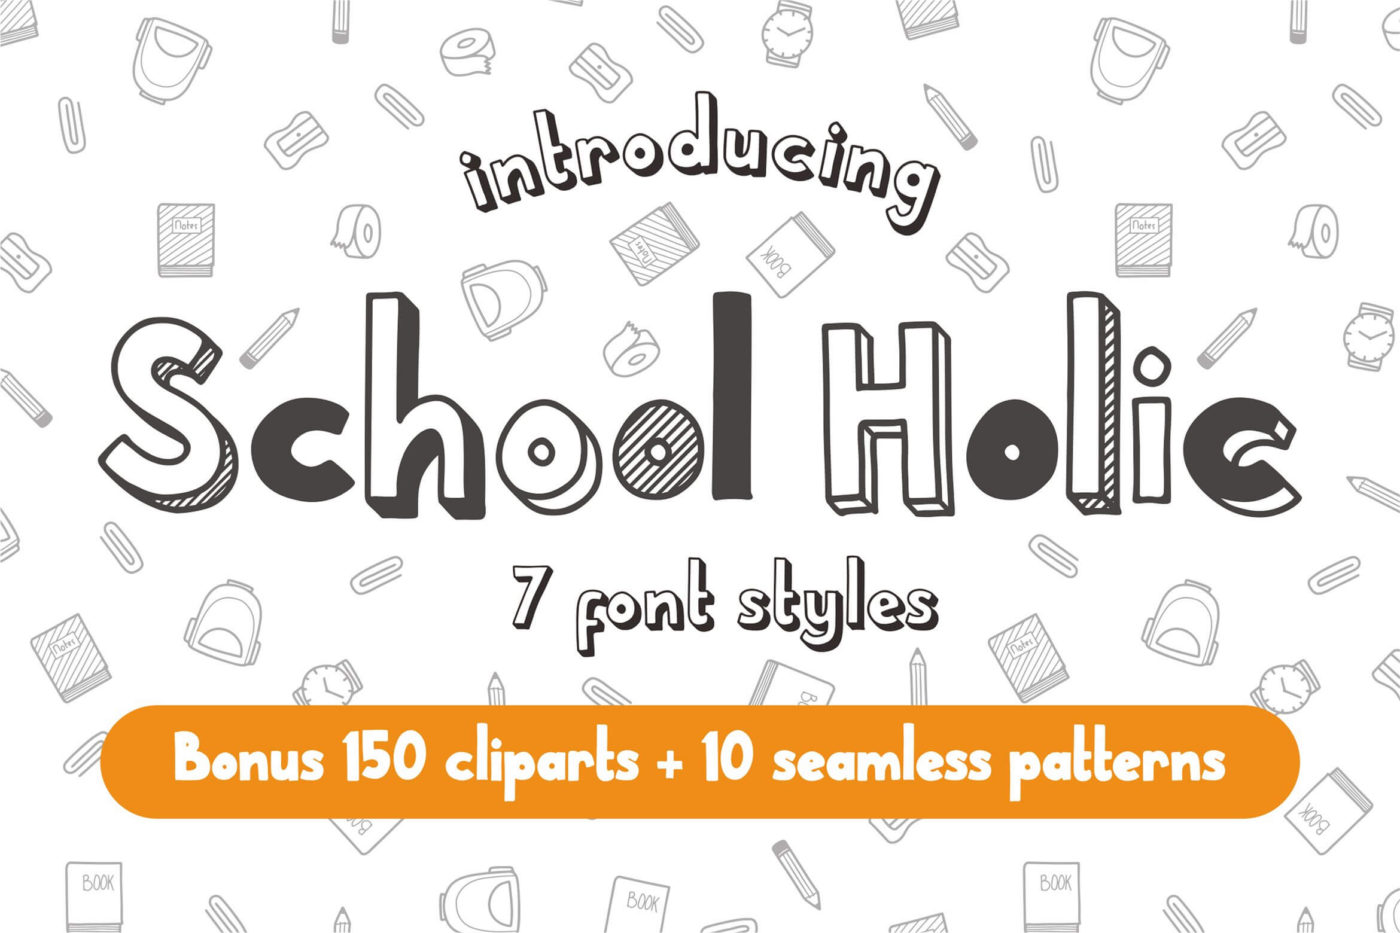 School Holic Font
--
25 Typefaces for Cool Kids • Little Gold Pixel • #schoolfonts #schooltype #schooltypefaces #typography #fonts